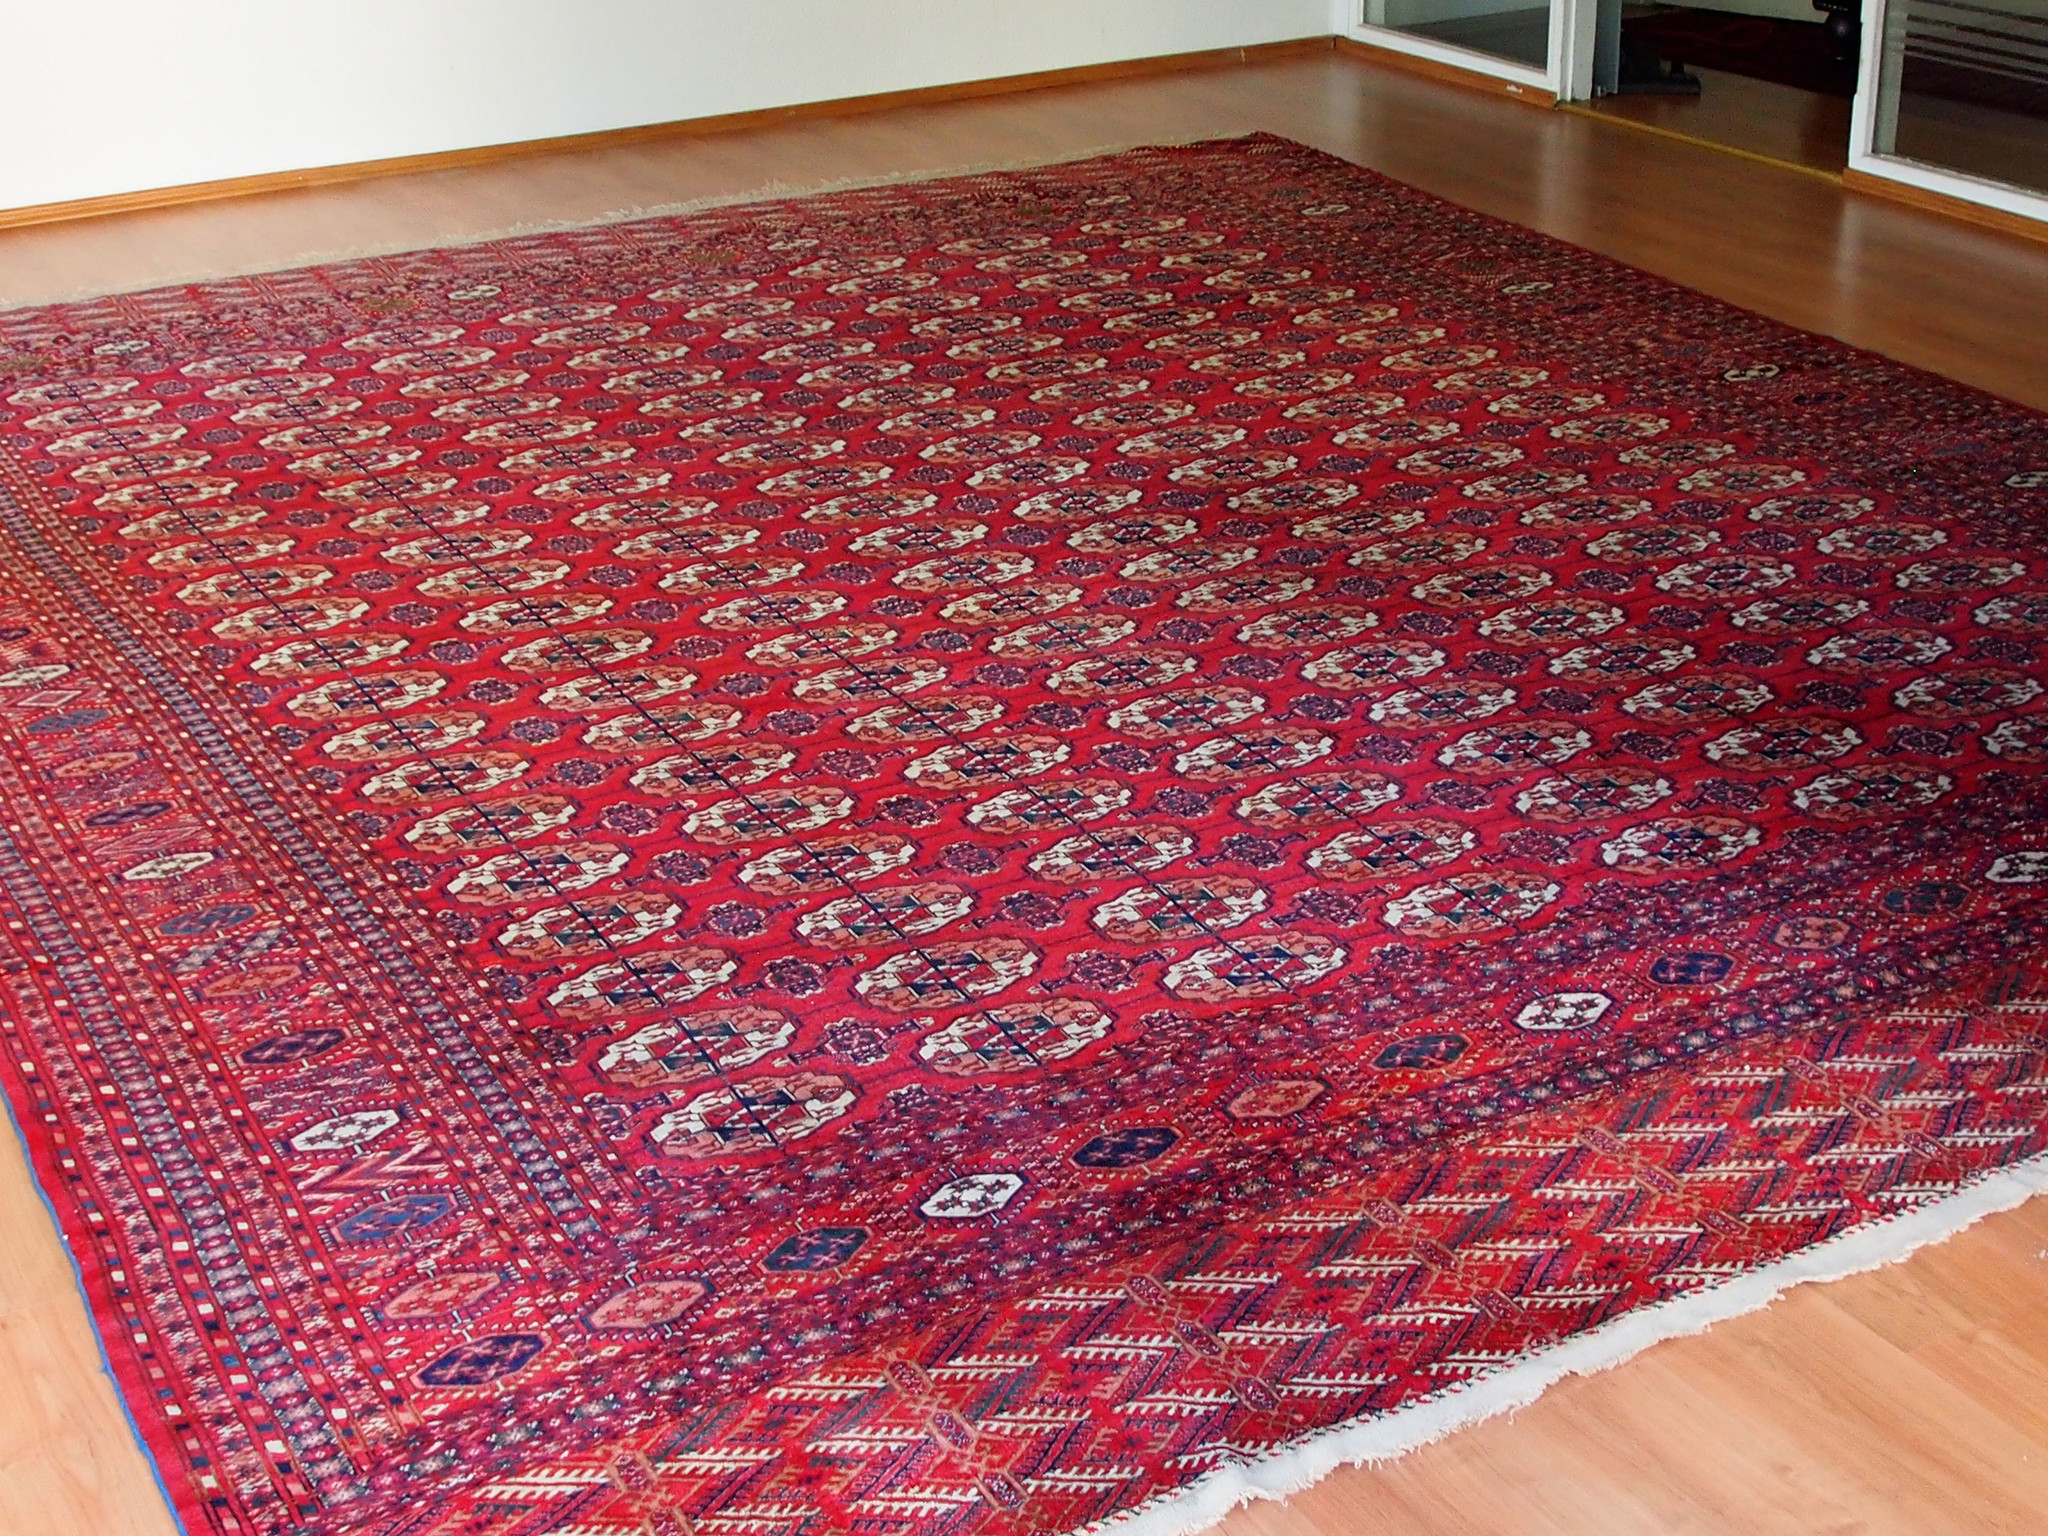 14.7 x 11.5  feet gigantic hand-knotted antique tekke rug Bukhara from Turkmenistan 19. c N0: XXL